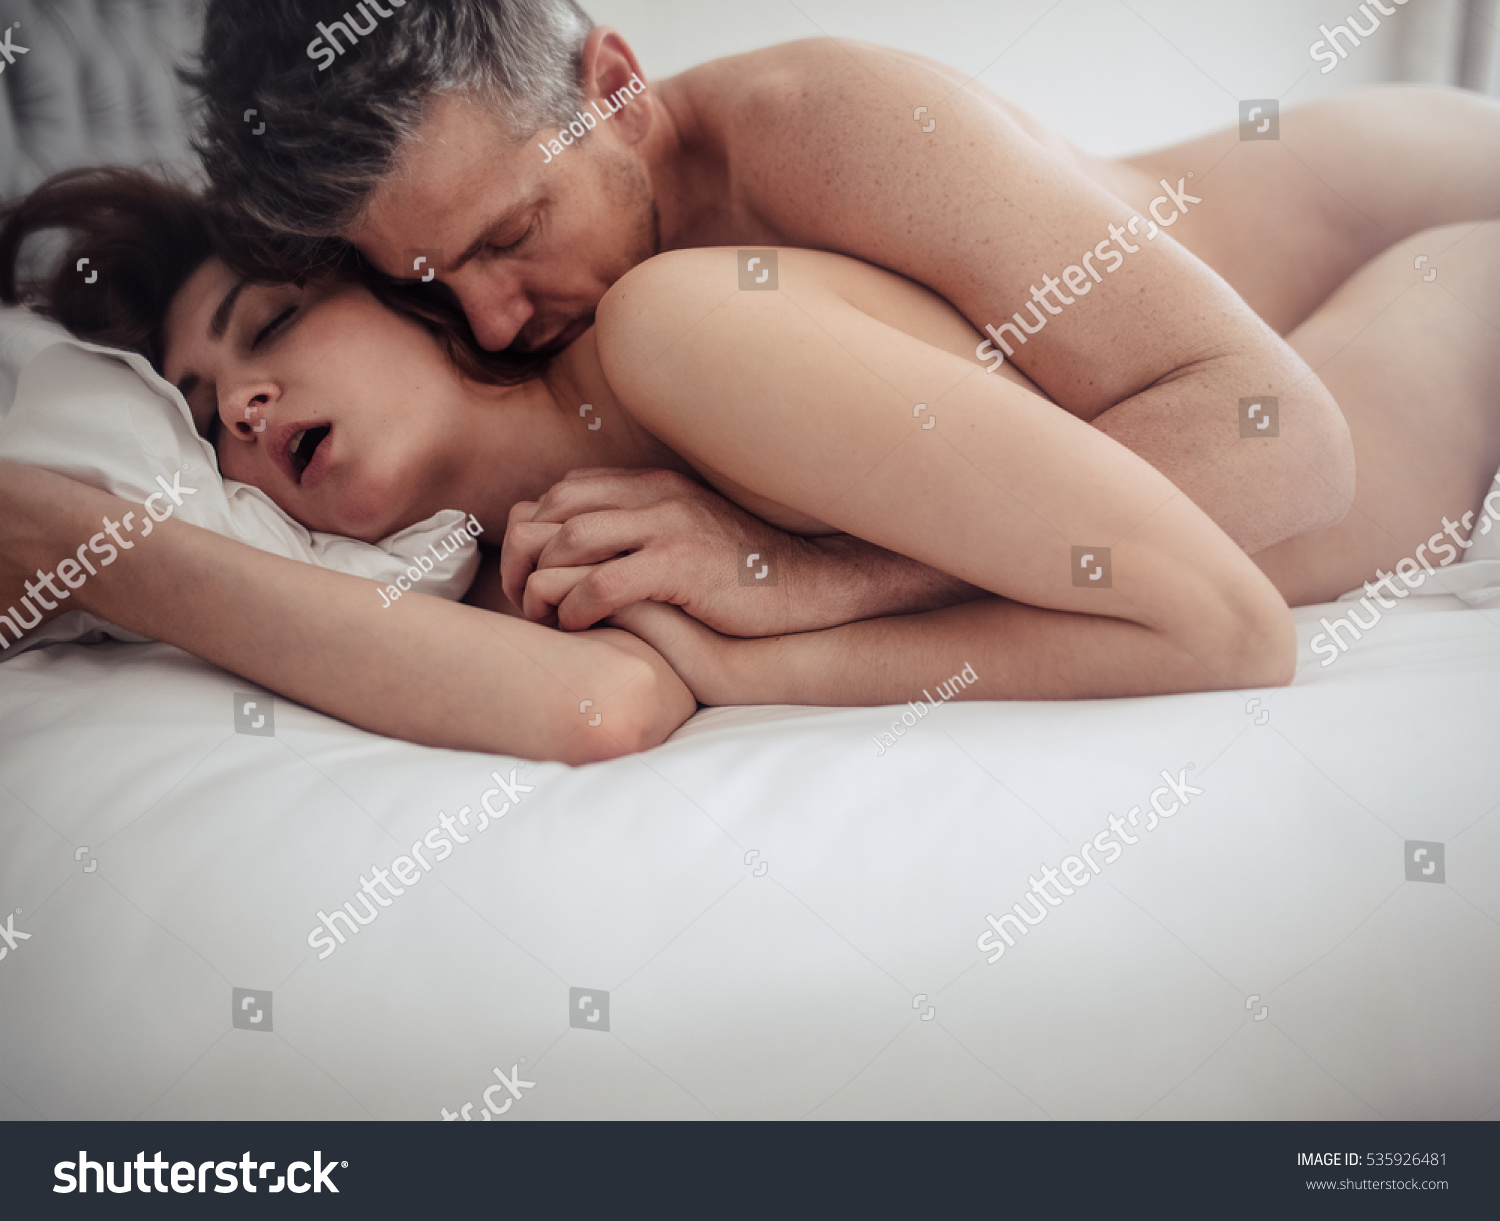 Nude family having sex